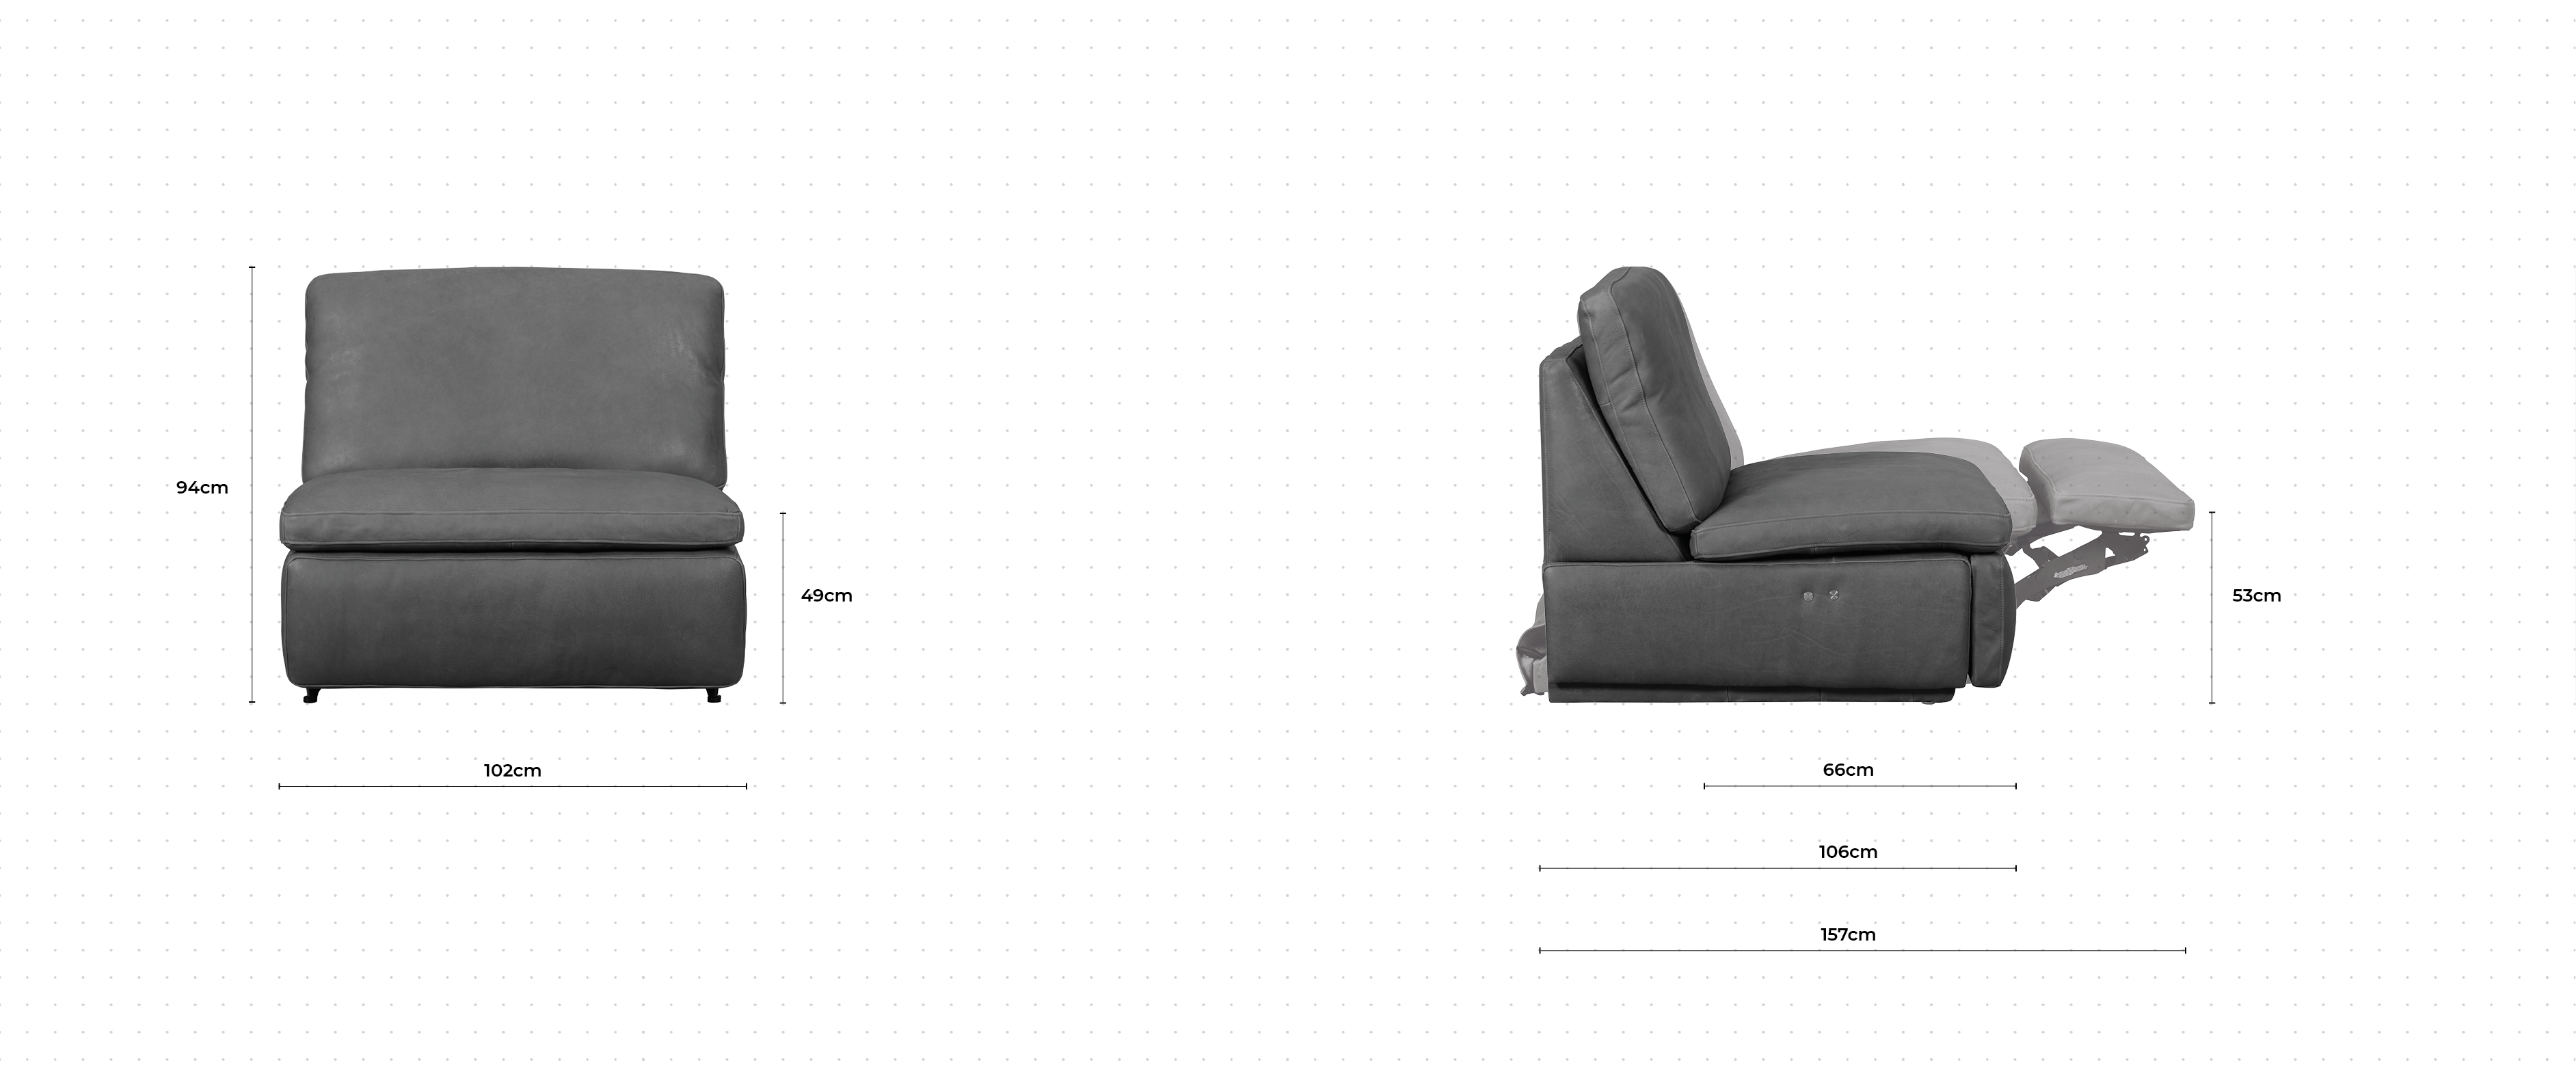 Spike Chair dimensions